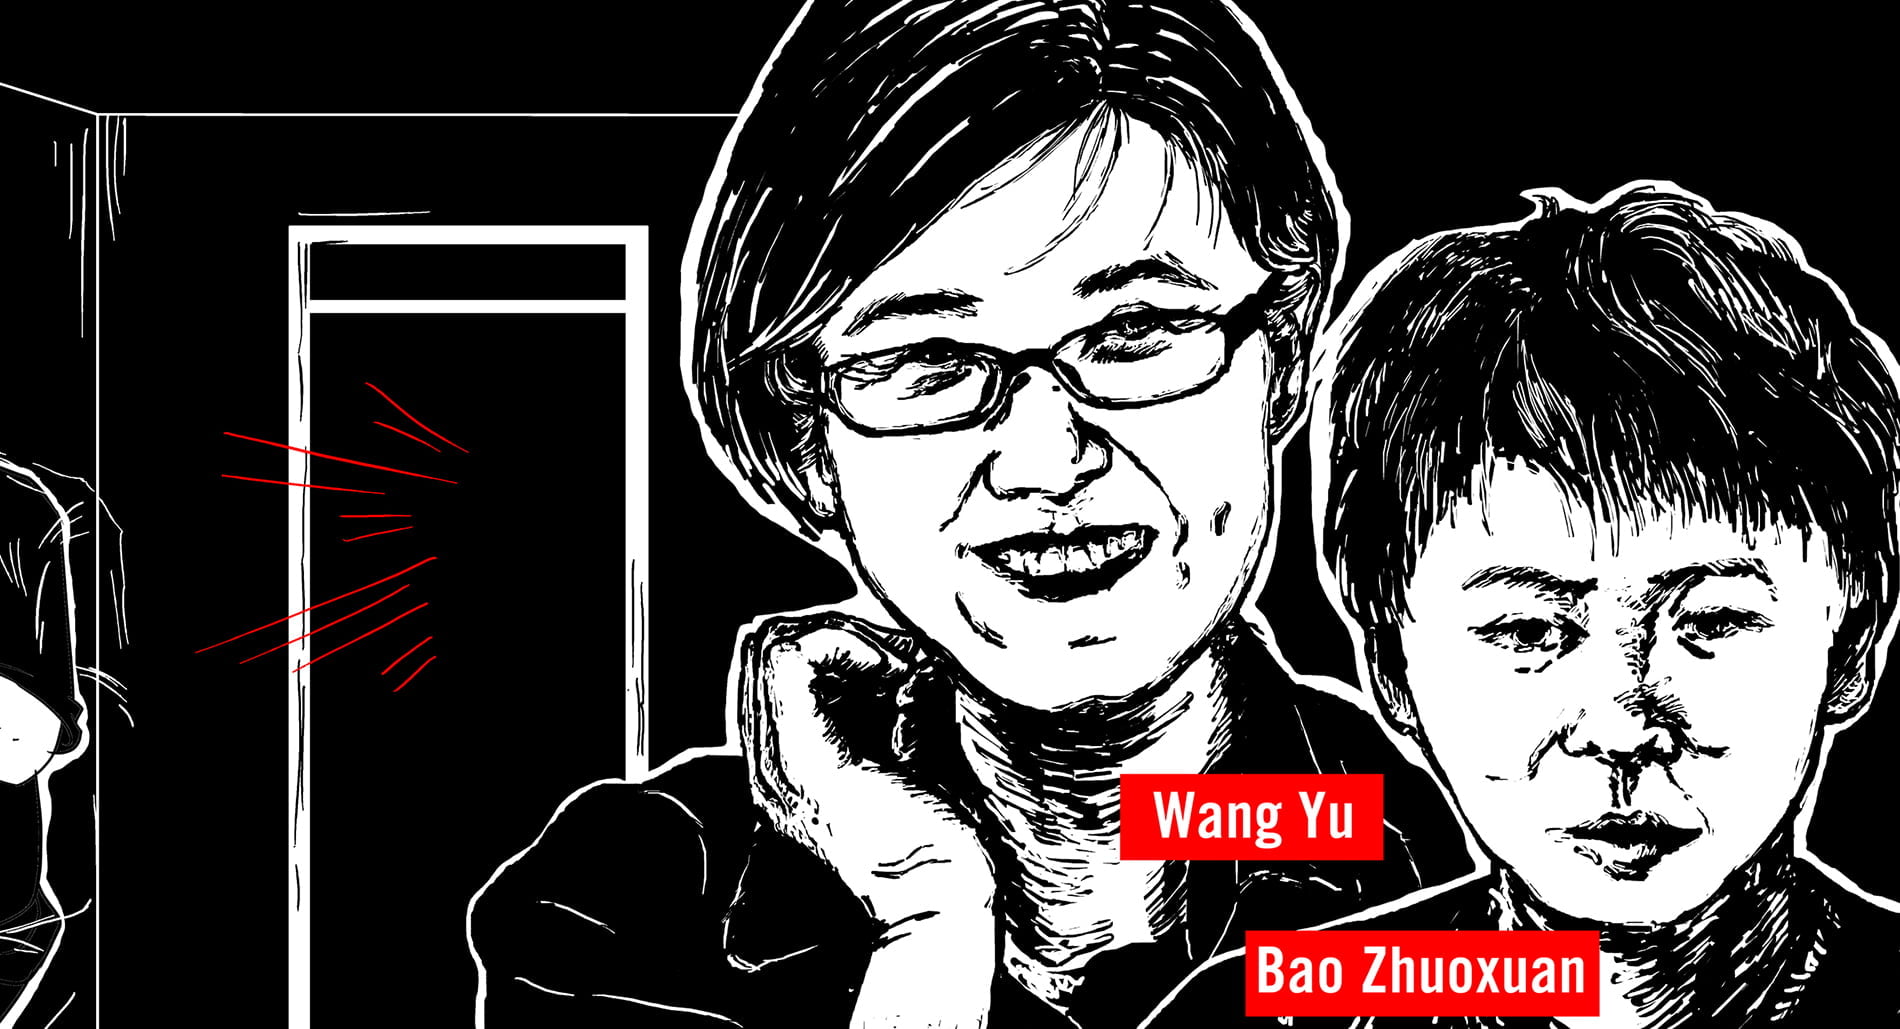 Illustration of Wang Yu and Bao Zhuoxuan